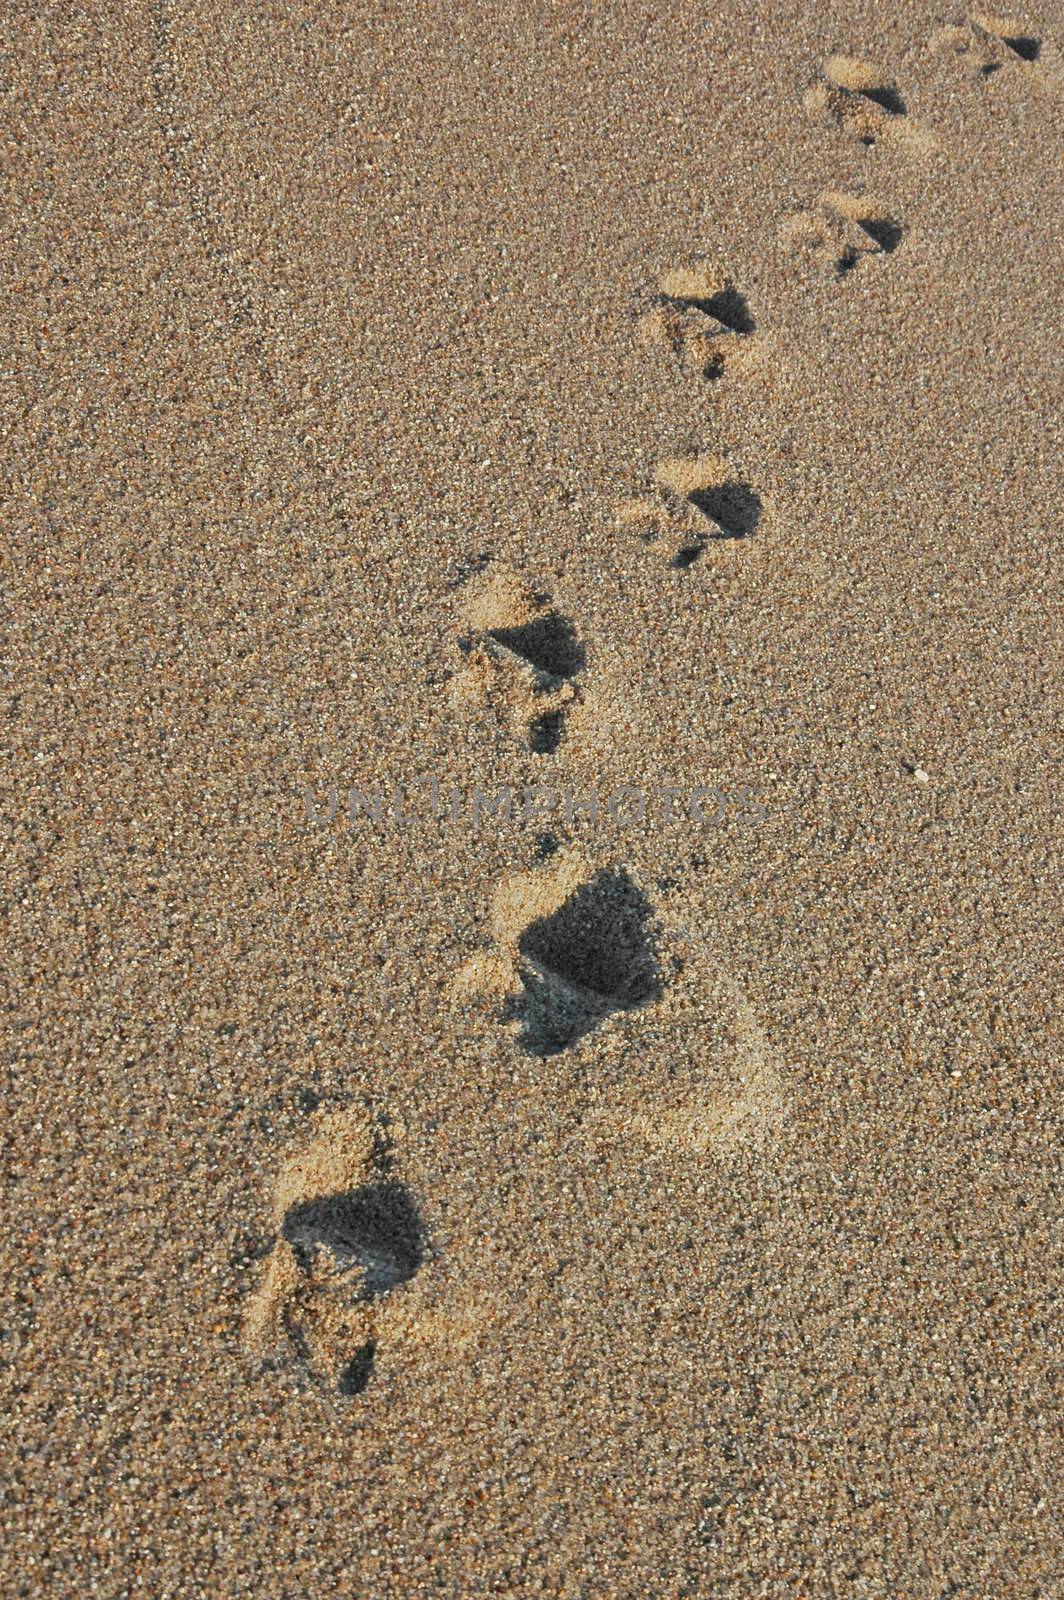 Footprints going over a sand dune